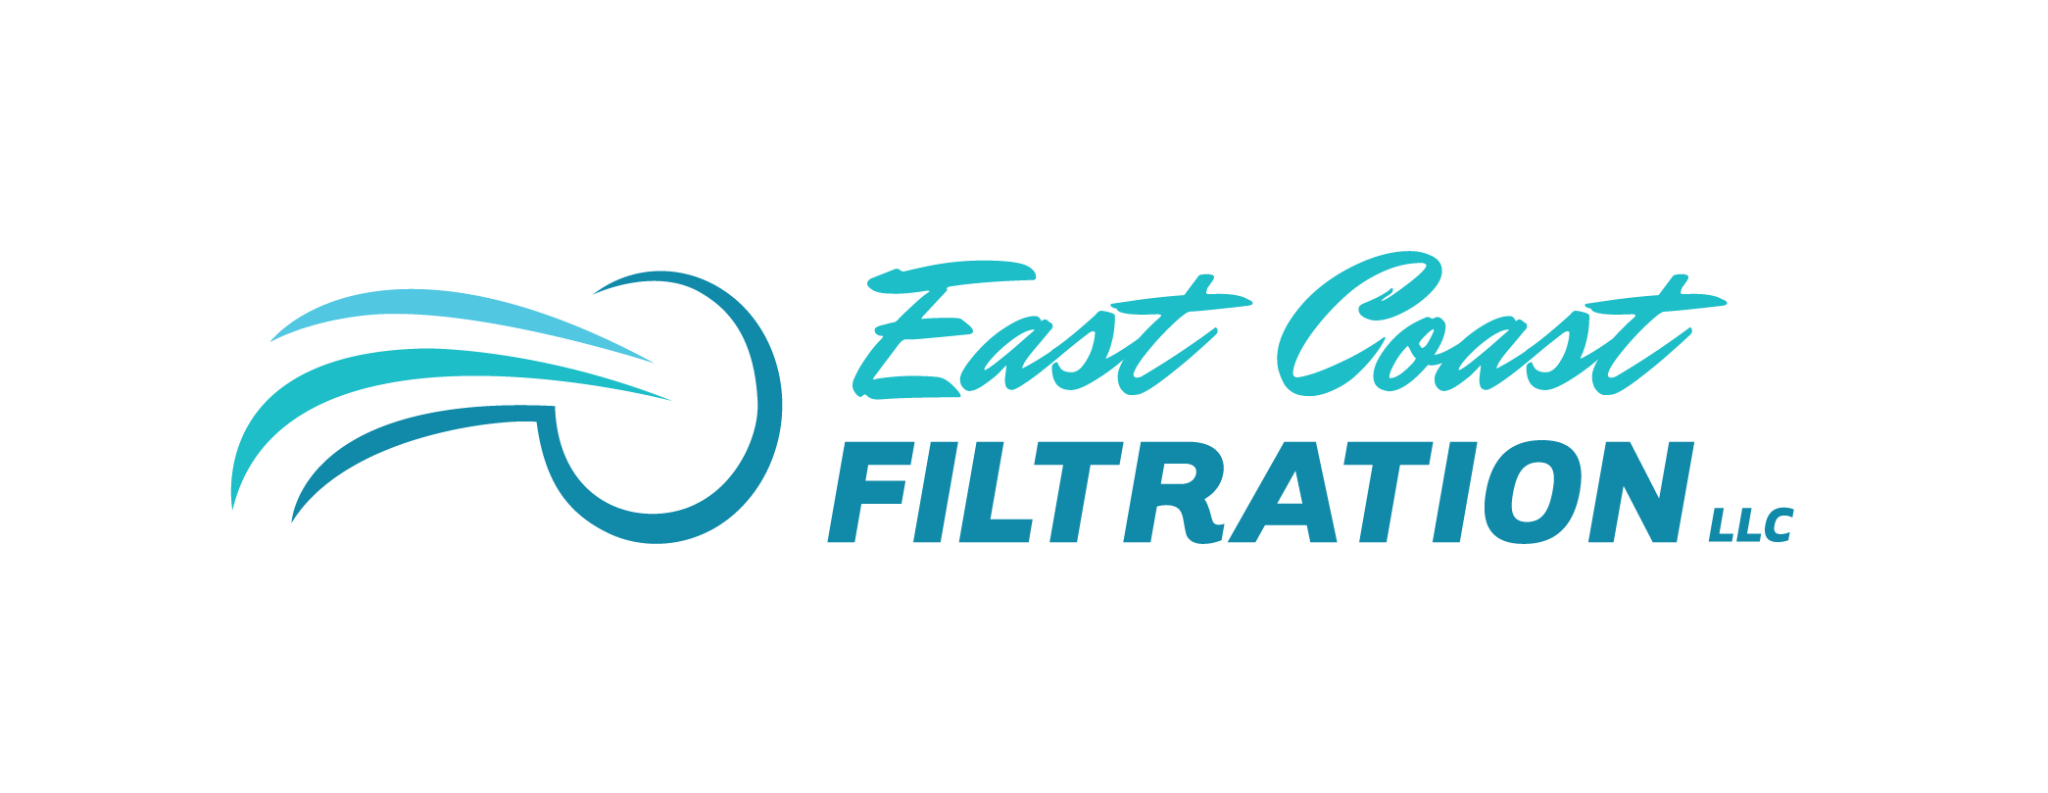 east coast filtration e-commerce website design